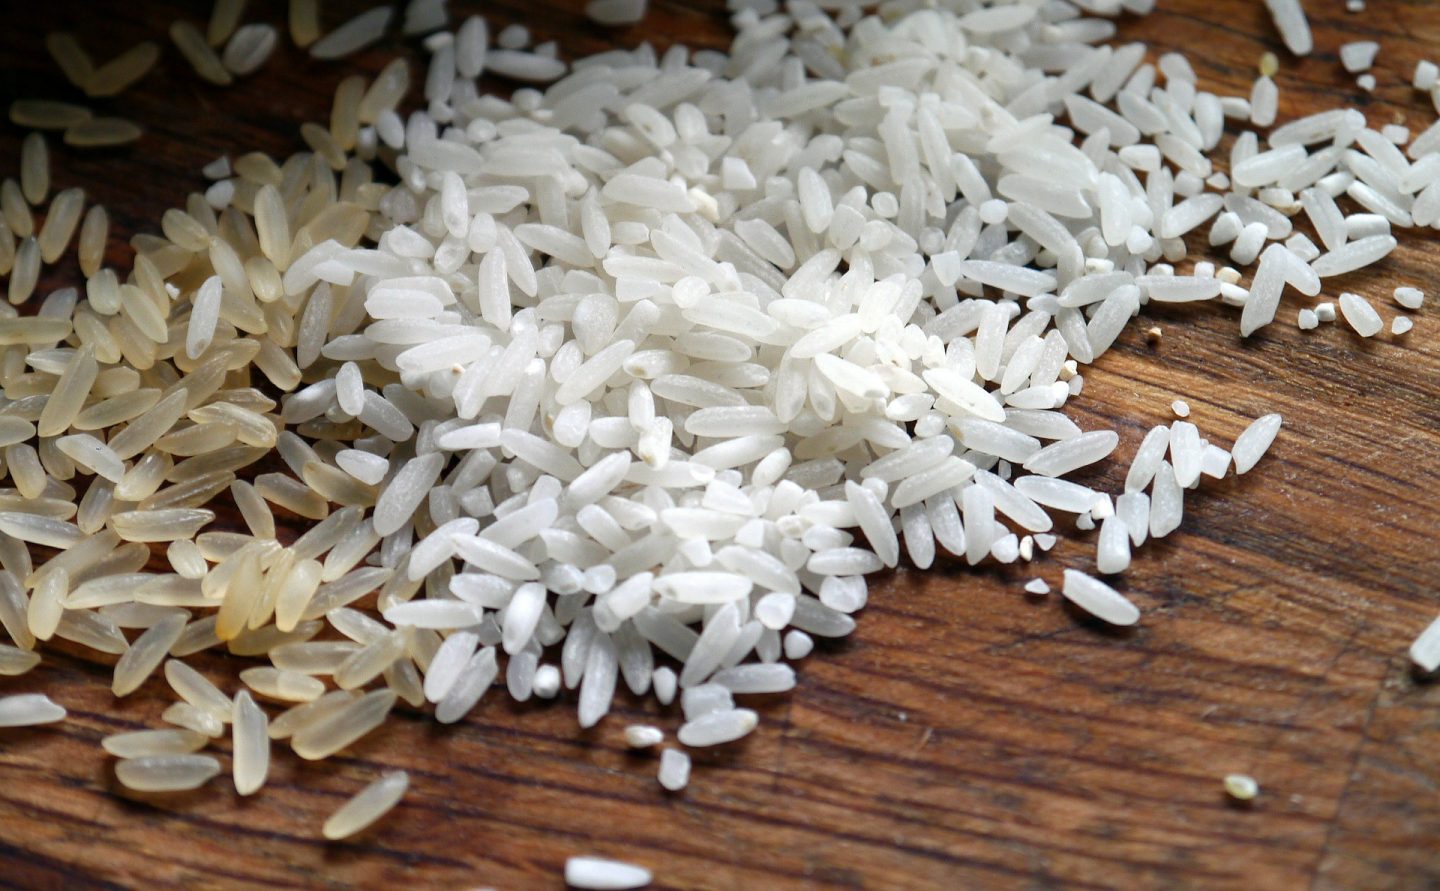 intoxicación por alimentos arroz recalentado